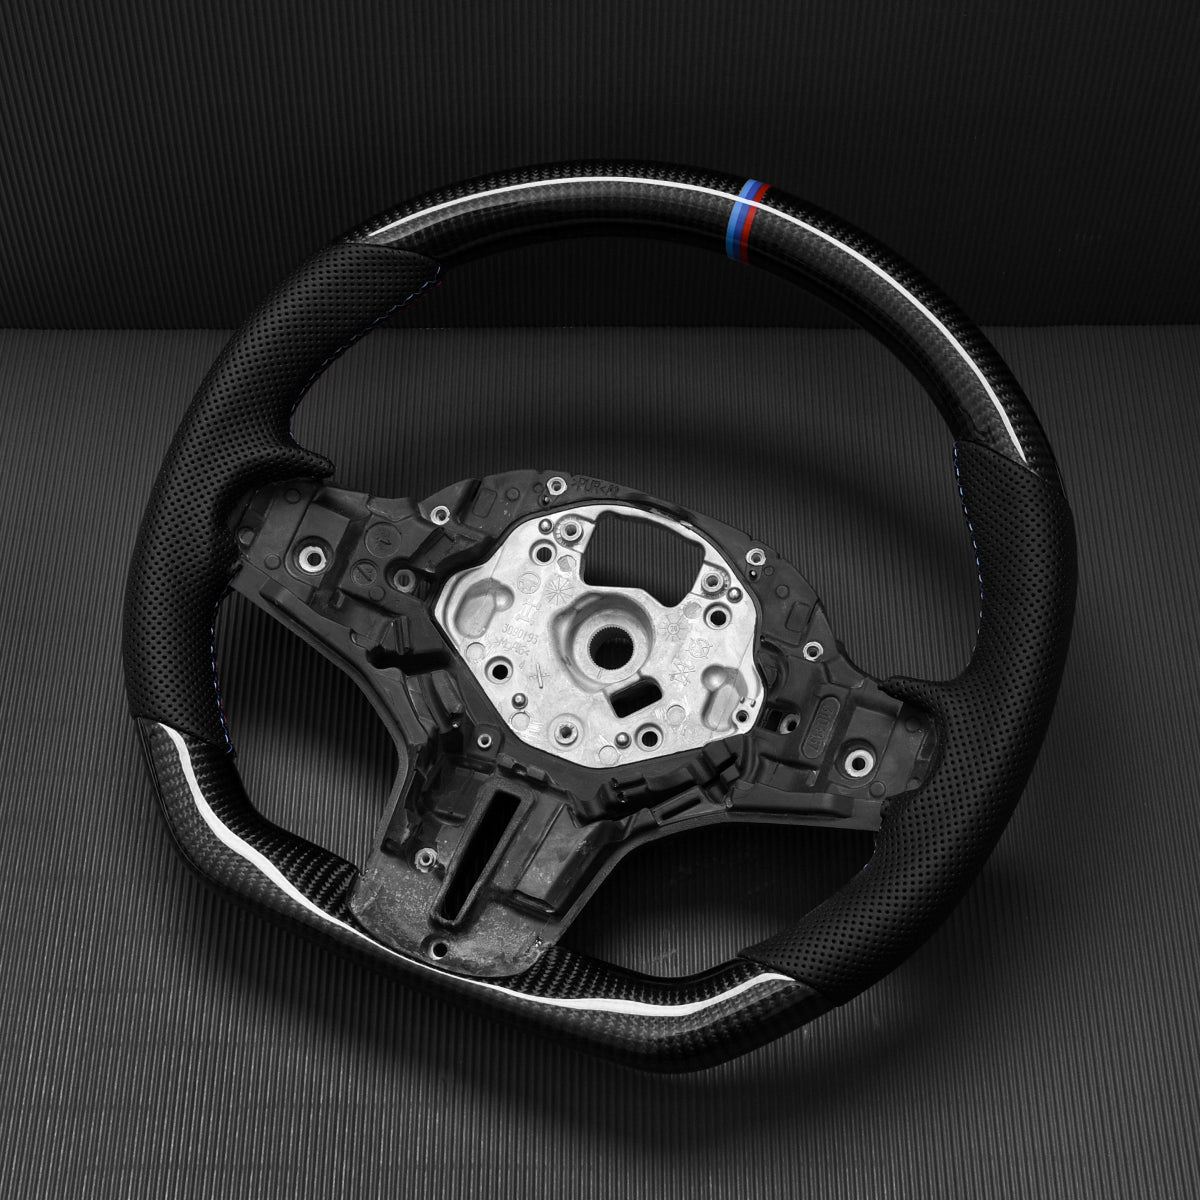 Revolve Carbon Fiber OEM Steering Wheel BMW M5 G30 G31 G38 G32 G11 G12 G14 G15 G16 5/6/7/8 Series G01/2/5/6 X3 X4 X5 X6 - revolvesteering